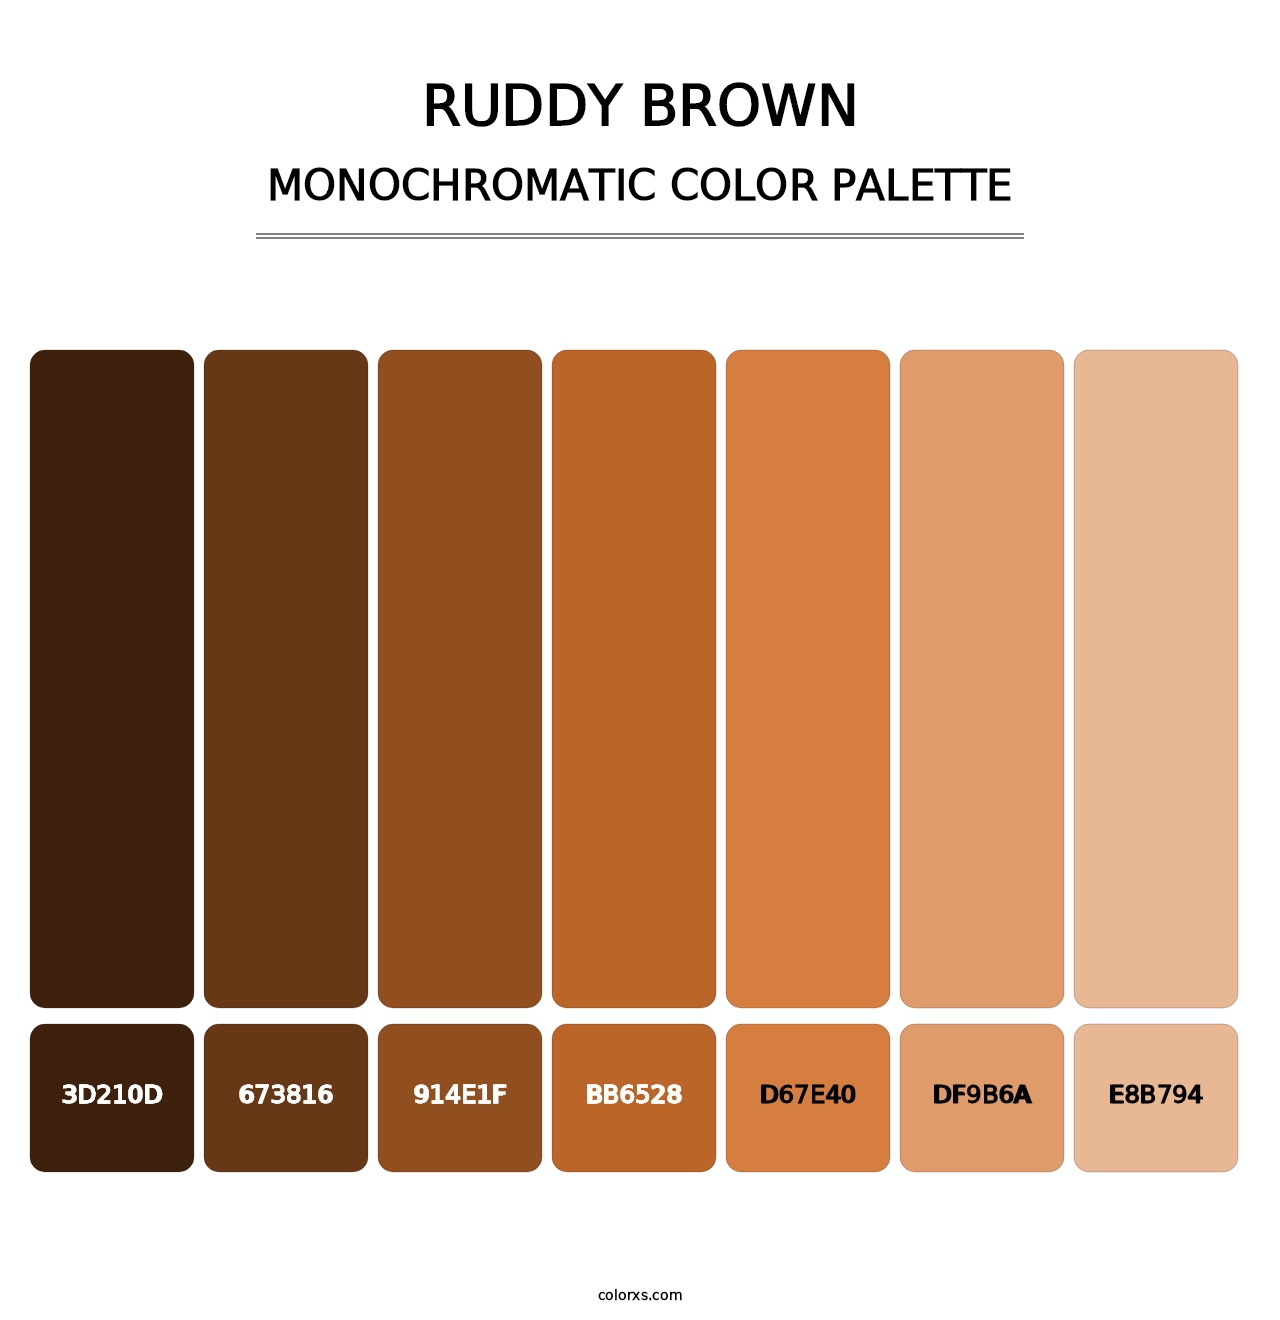 Ruddy Brown - Monochromatic Color Palette